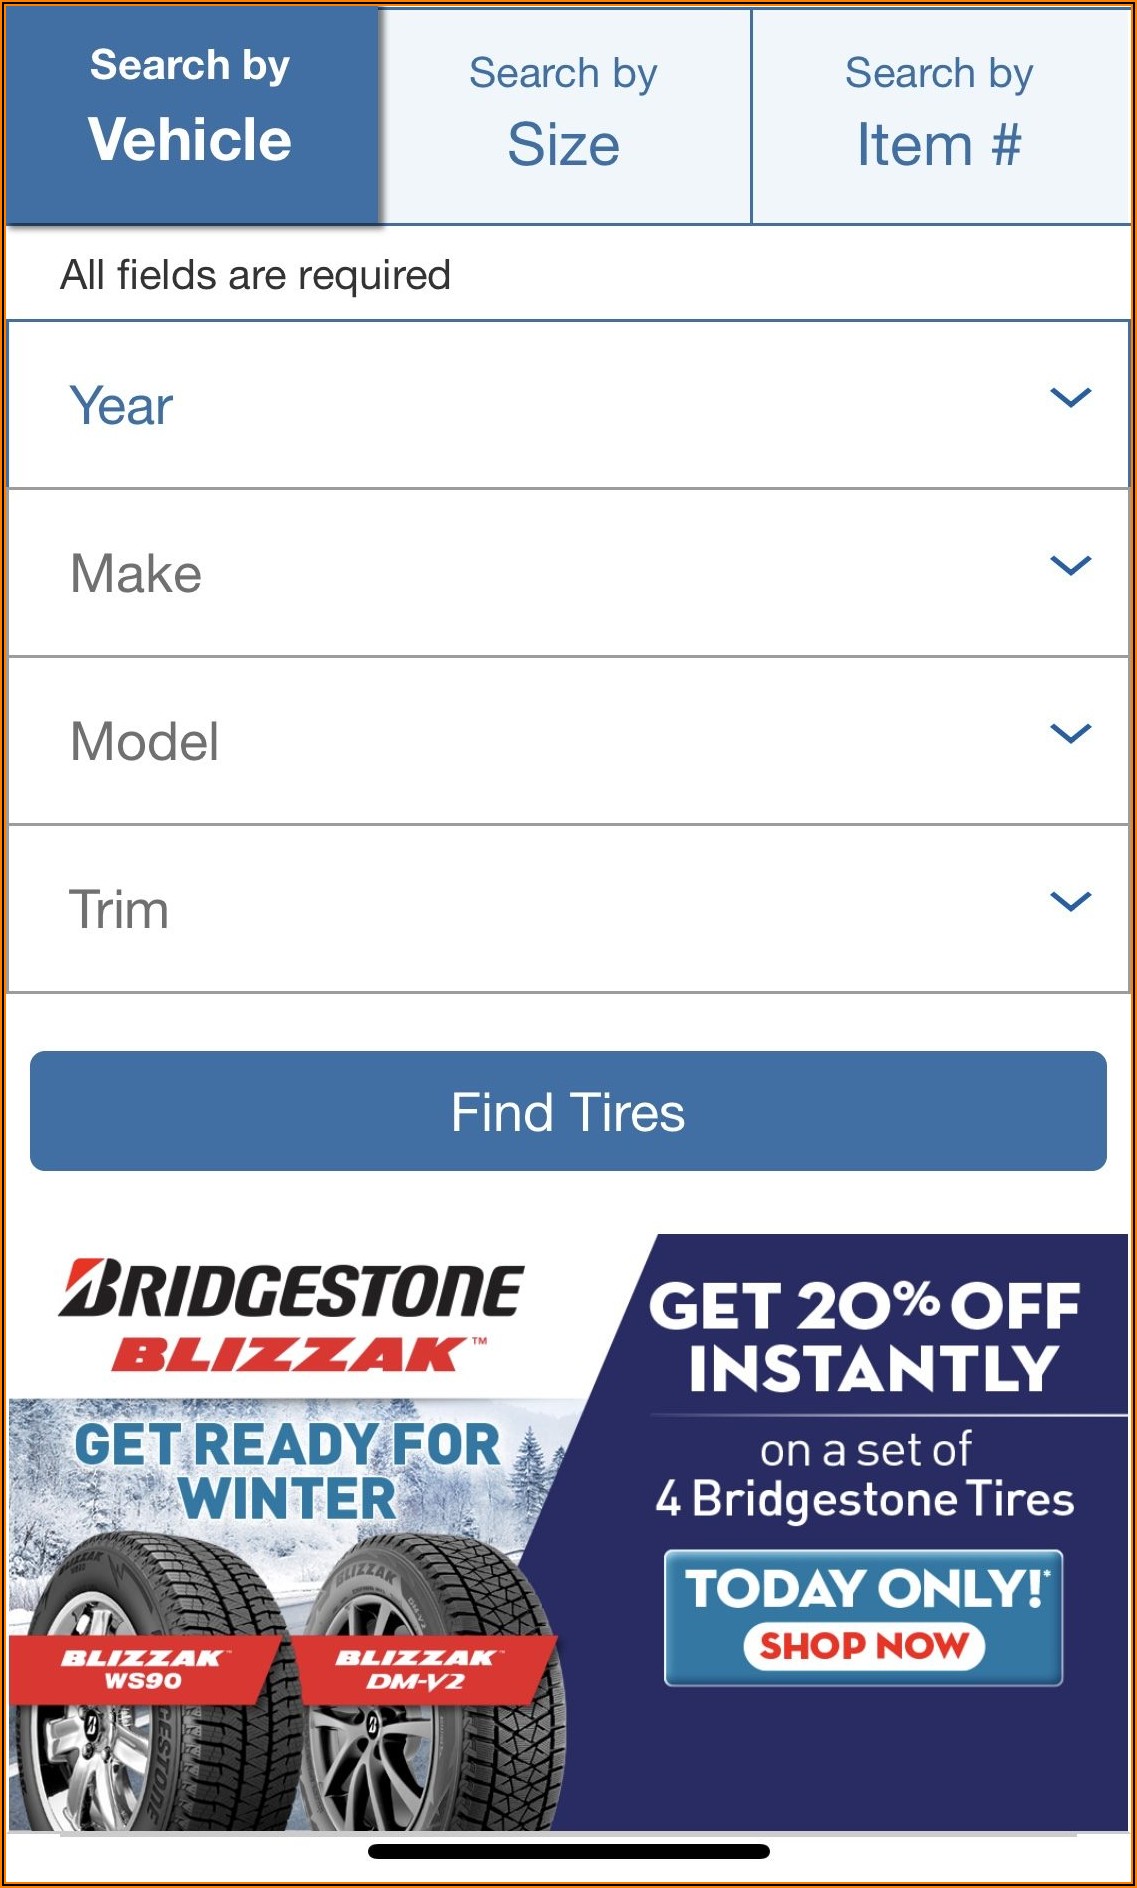 Bridgestone Tire Rebate Form 2019